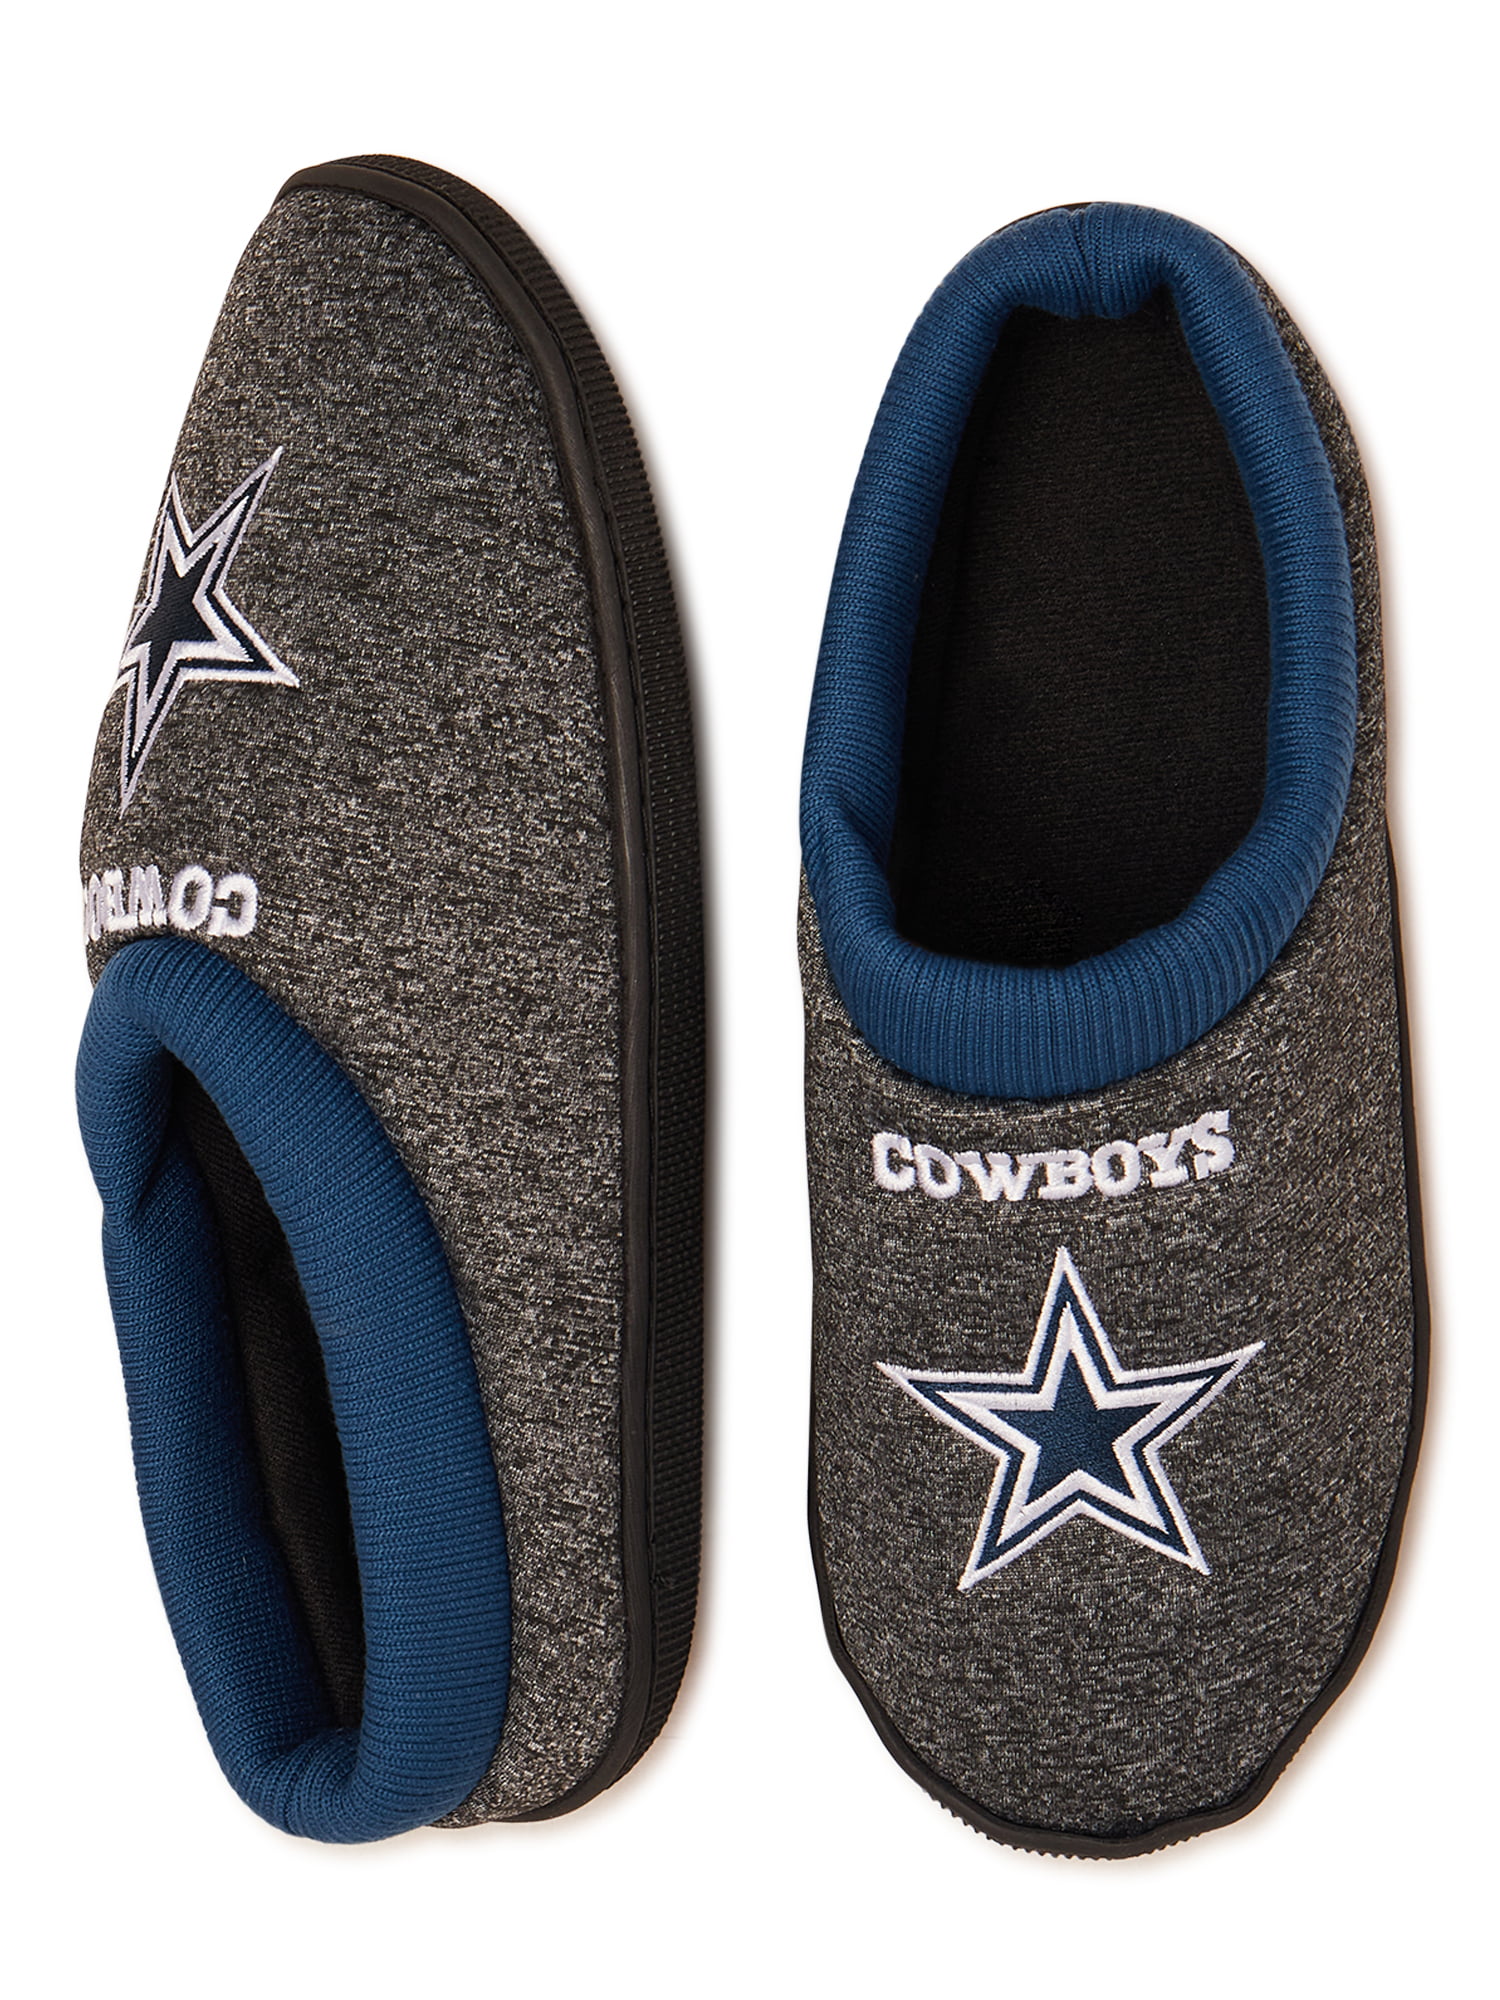 Dallas Cowboys Men's Moccasin Slippers 21 / S